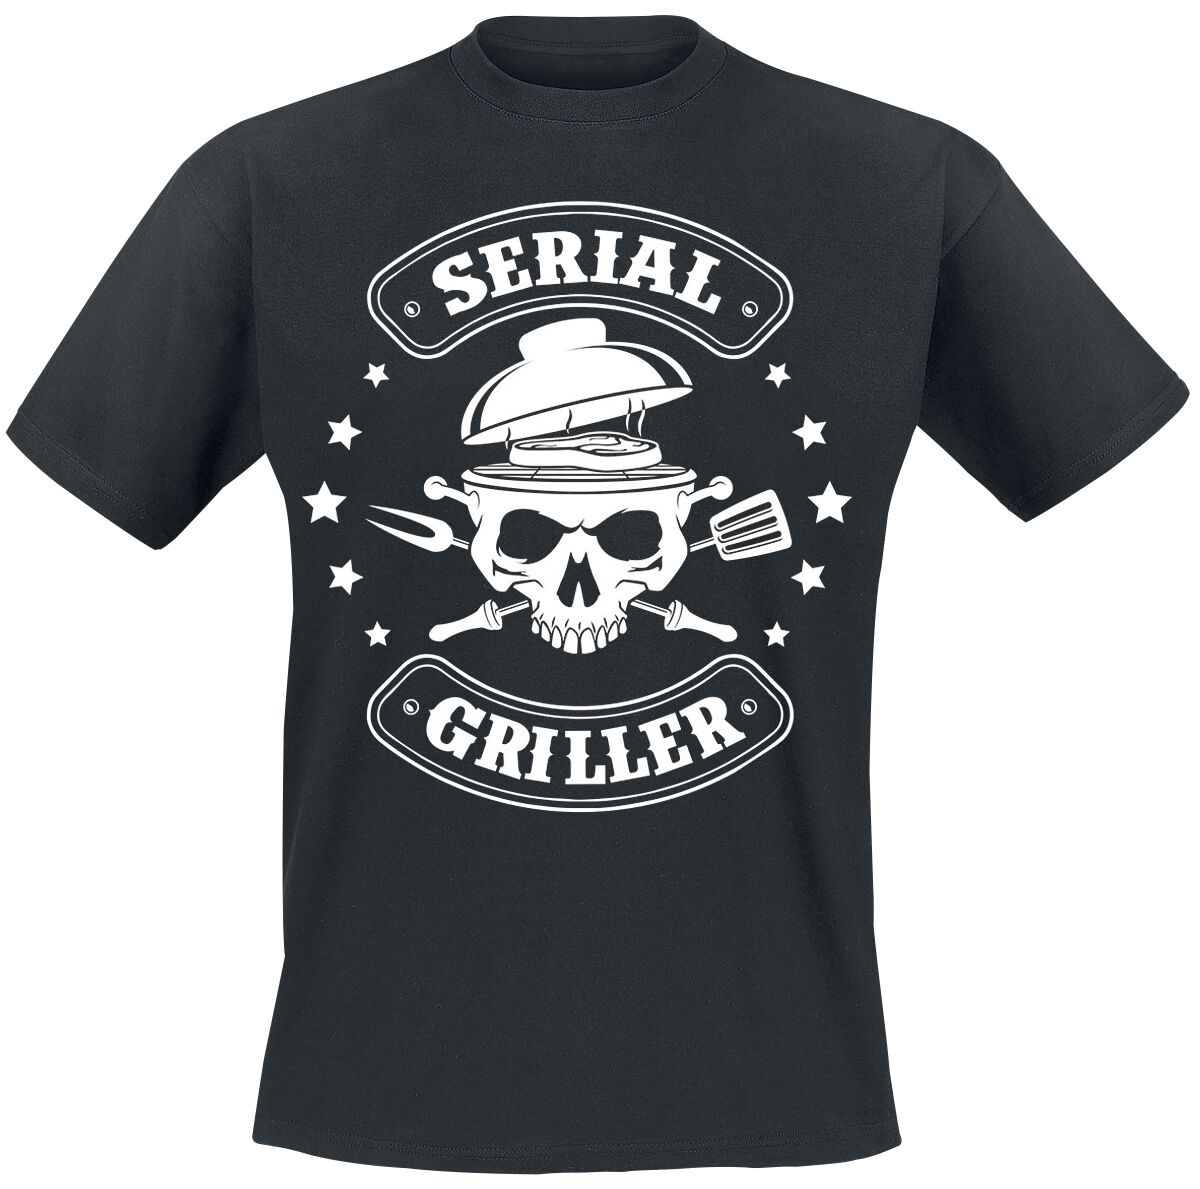 Serial Griller  T-Shirt black